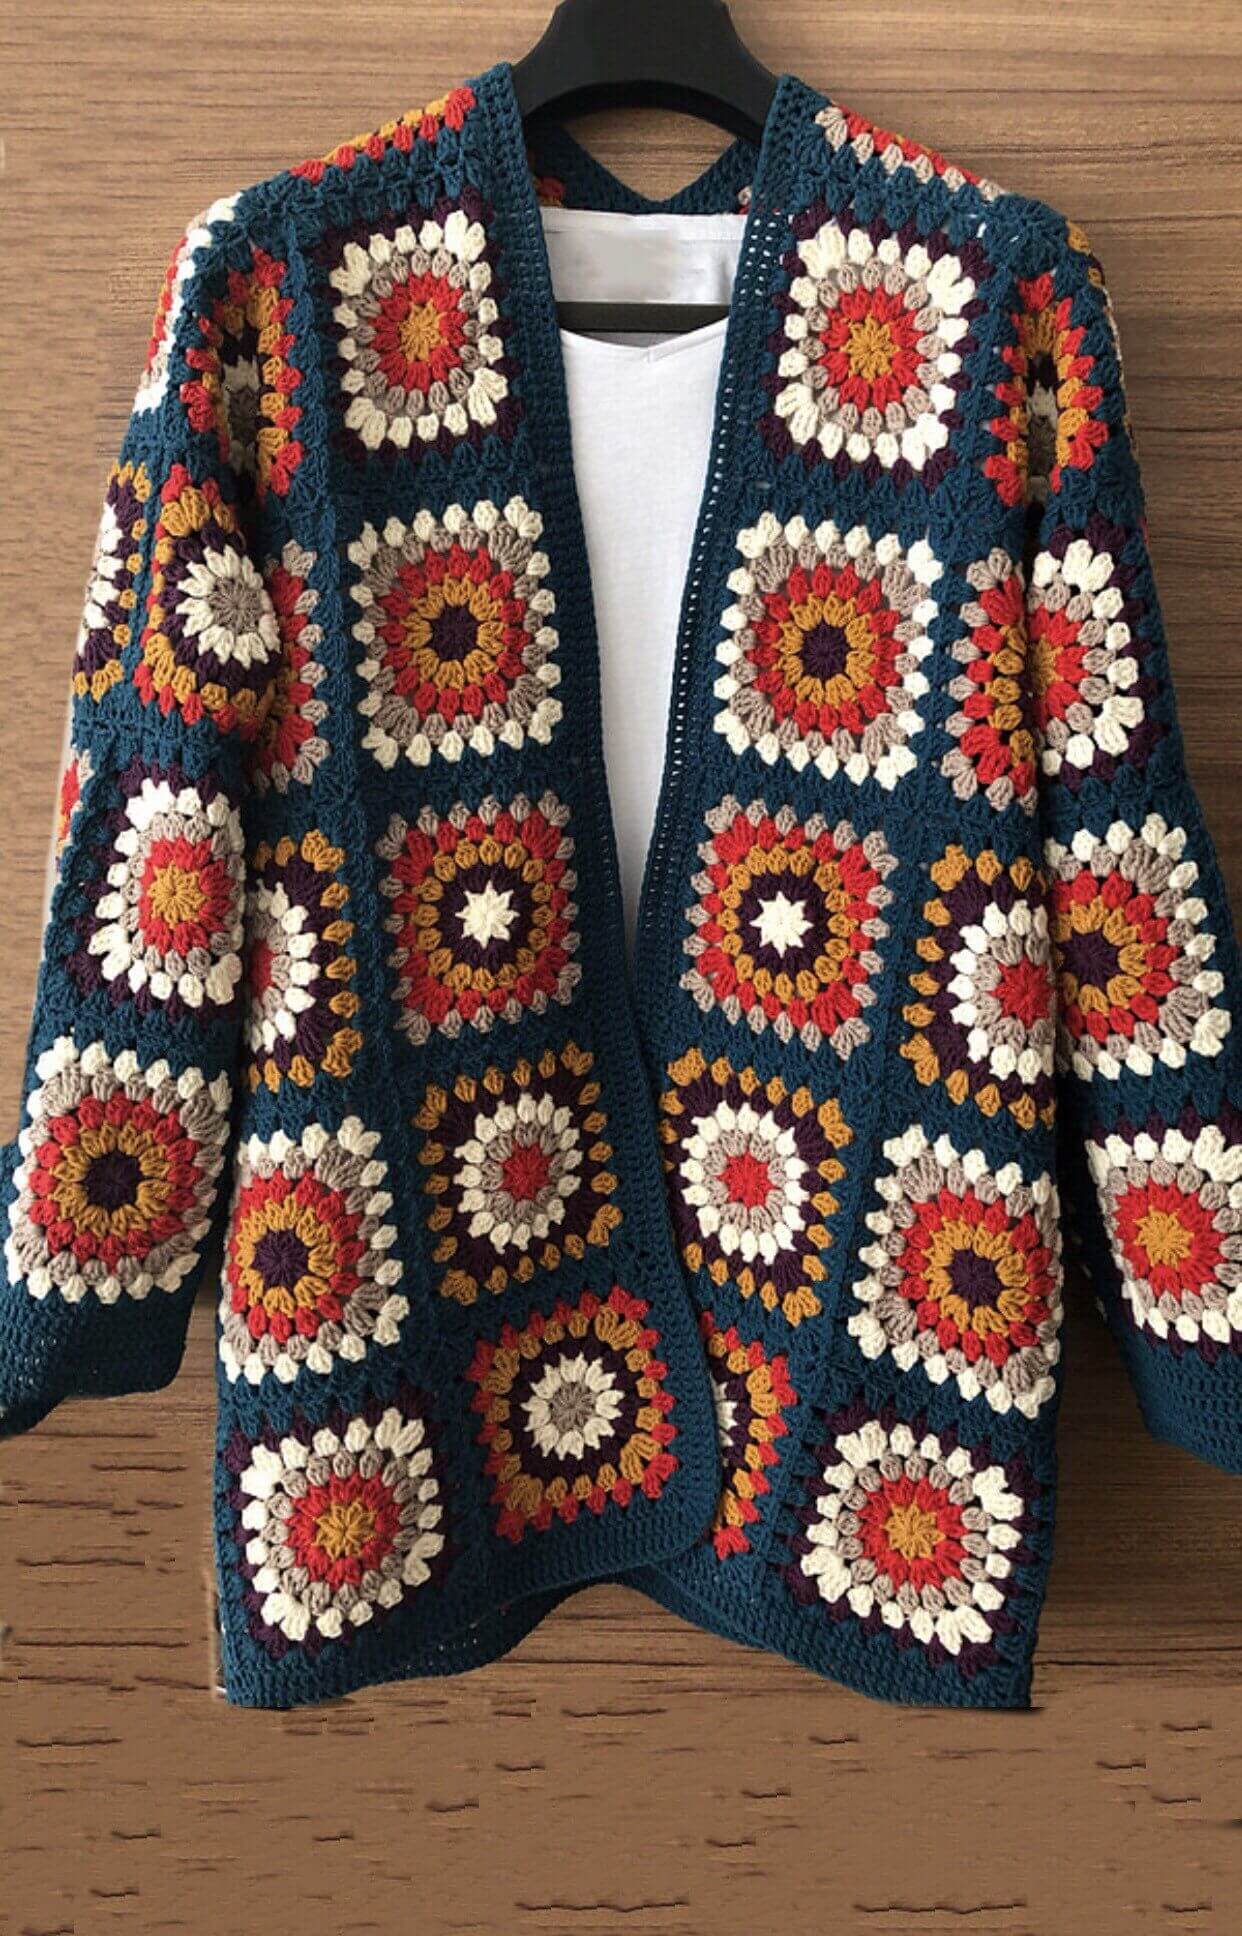 15 Crochet Granny Square Jacket Cardigan Free Pattern